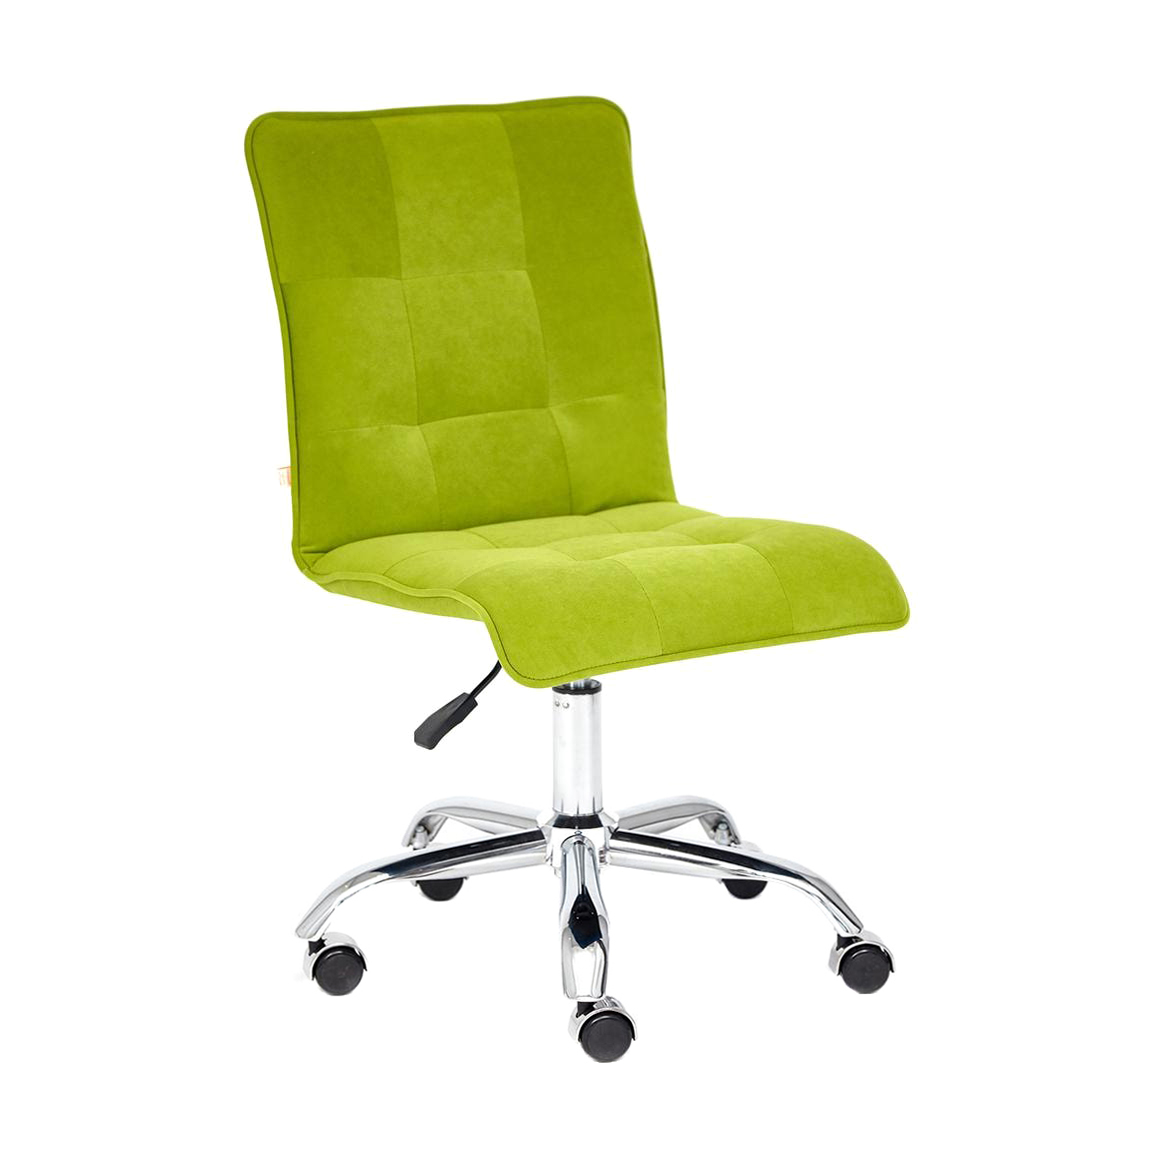 Кресло офисное TC до 100 кг 96х45х40 см оливковый кресло офисное tc до 100 кг 96х45х40 см